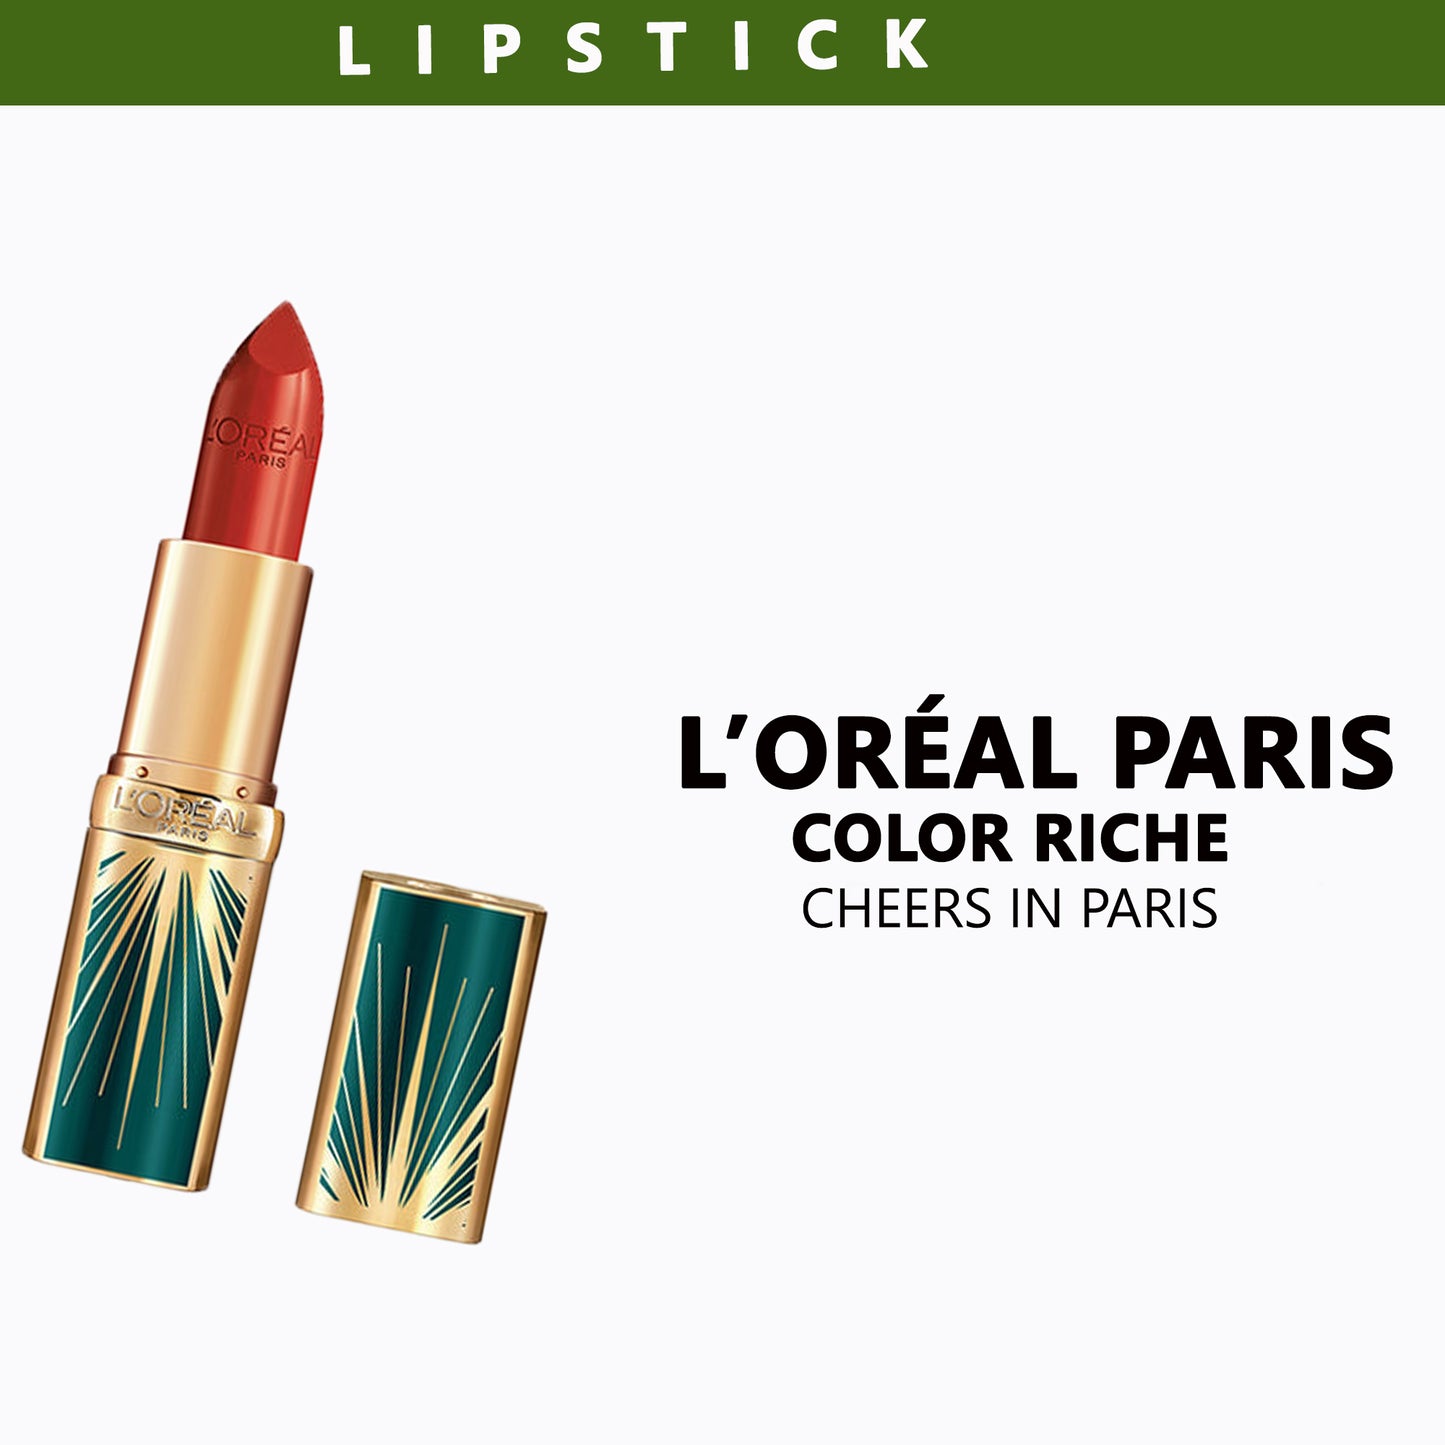 L’Oreal Paris Colour Riche Lipstick Limited Edition